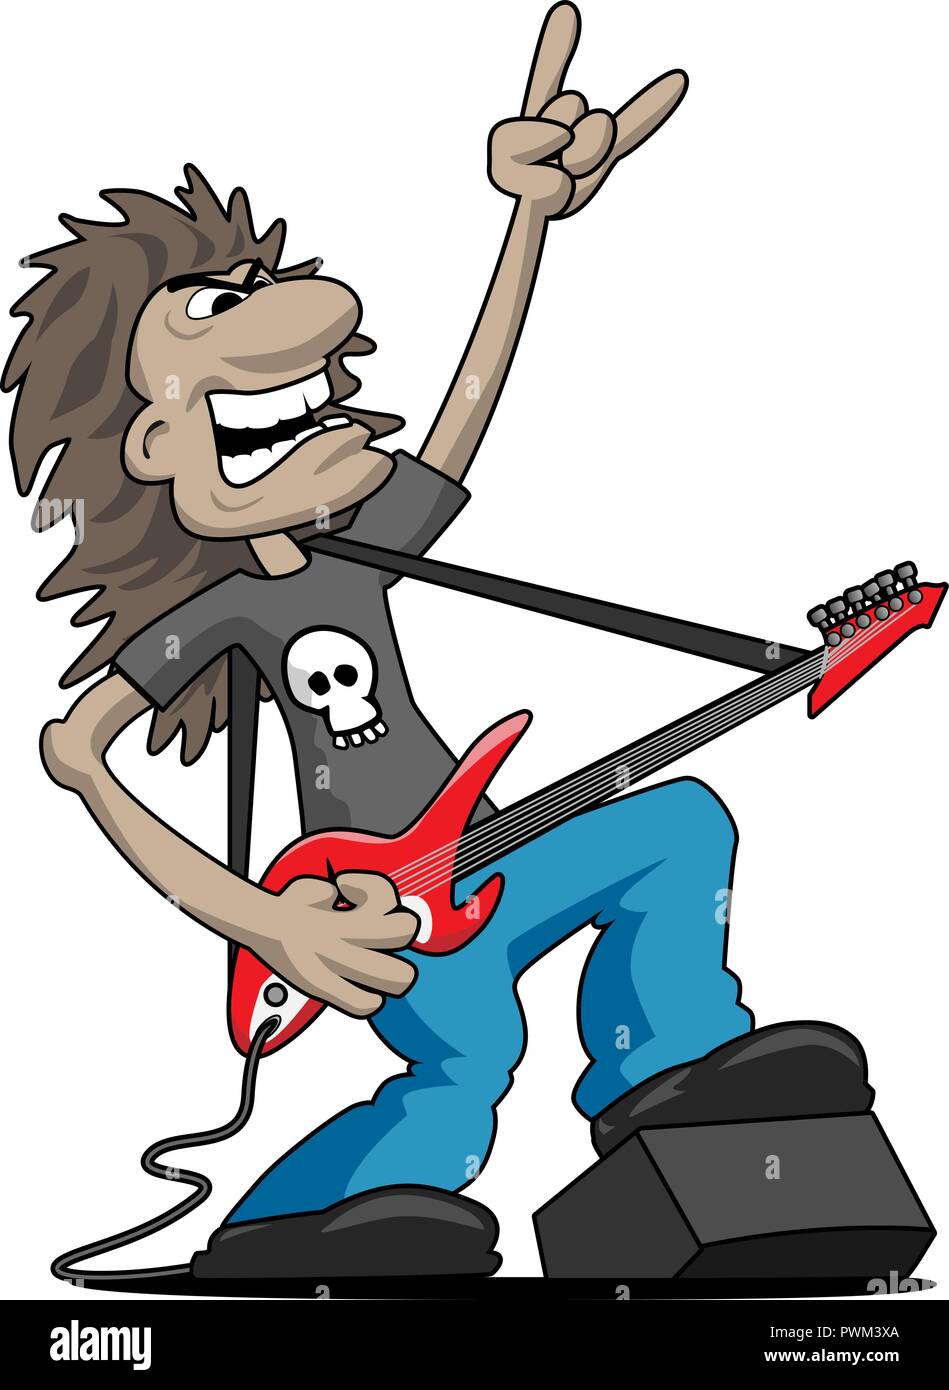 Heavy Metal chitarrista rock Cartoon illustrazione vettoriale Illustrazione Vettoriale